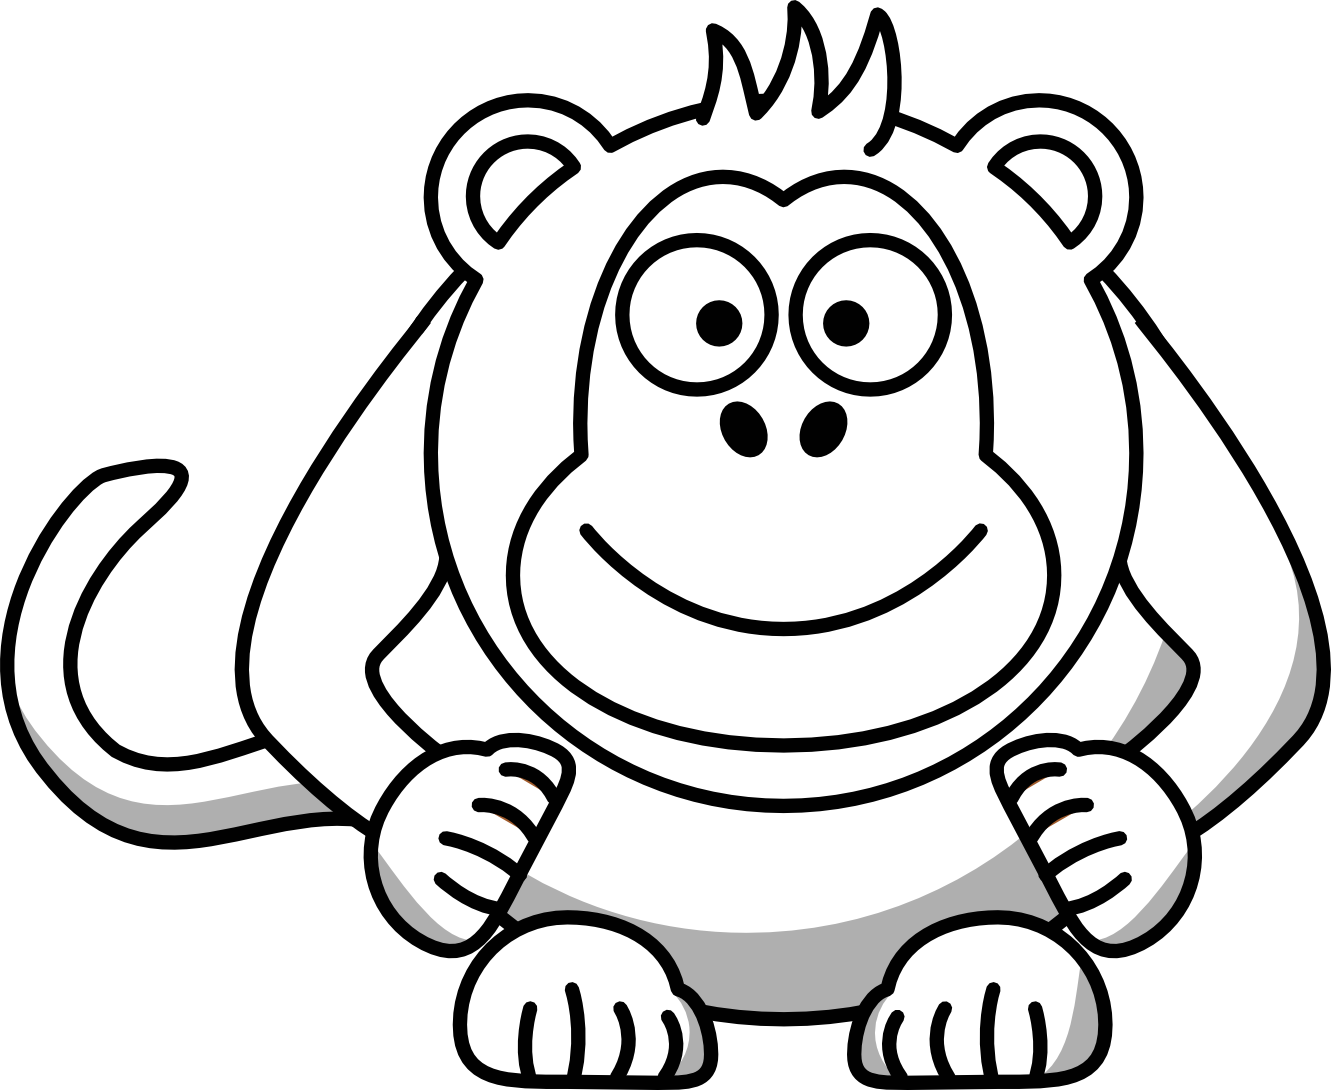 Monkey clip art cute monkeyloring pages cartoon monkey